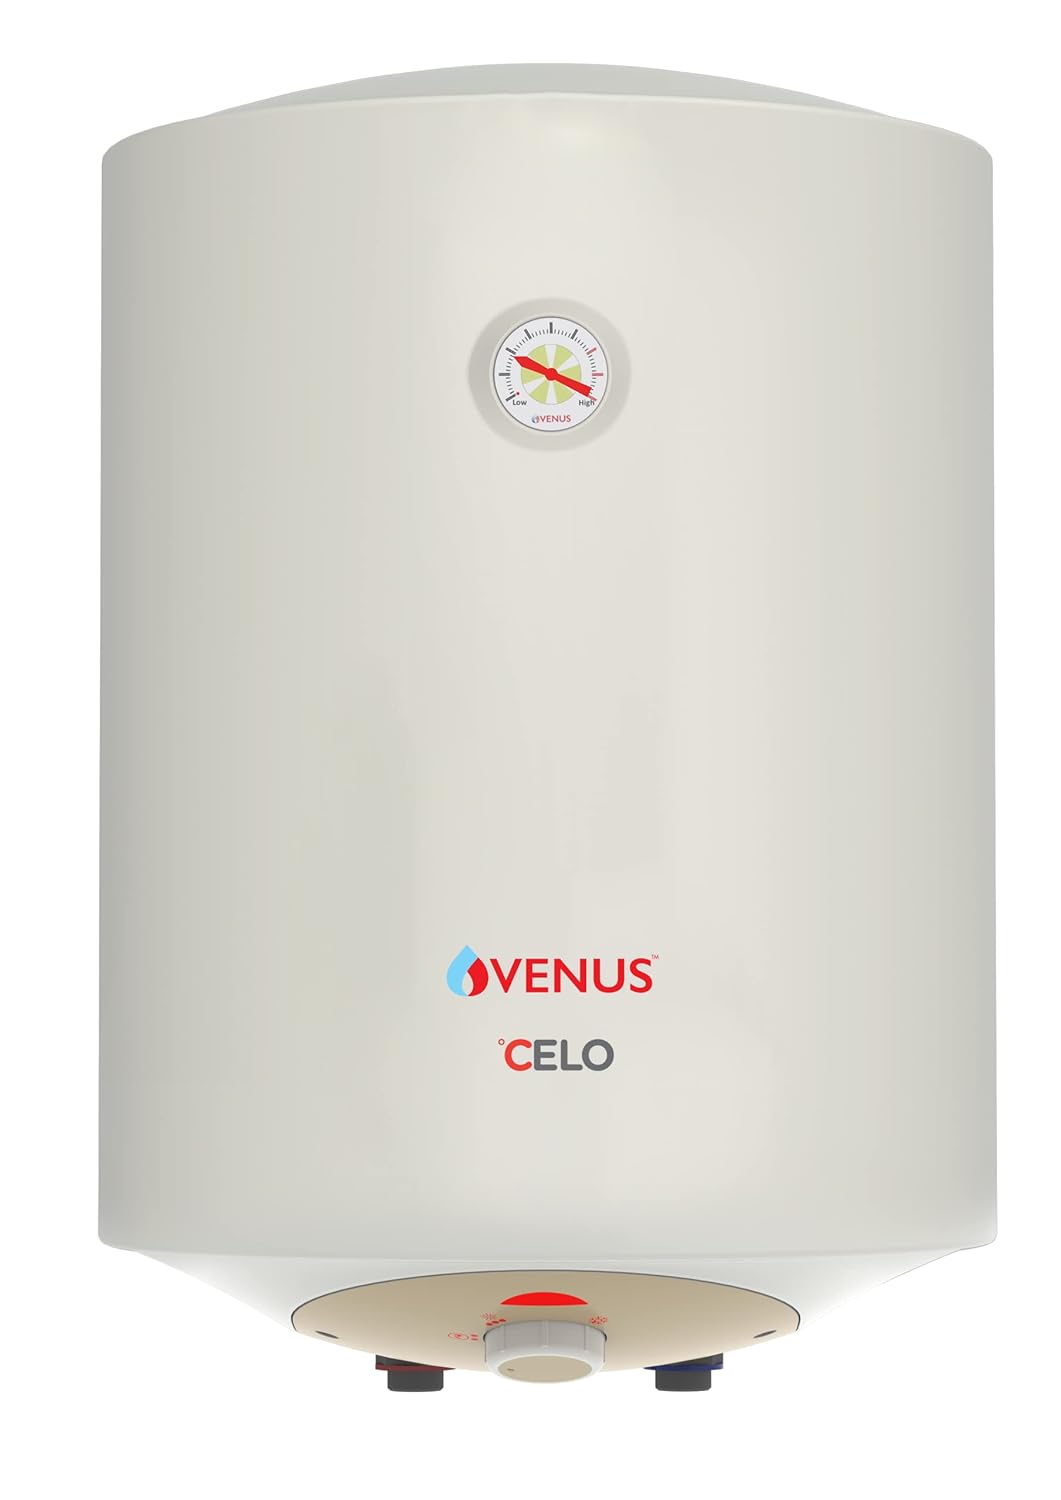 venus-celo-15cv-15-litre-storage-water-heater-ivory-bee-star-rating-5-stars-